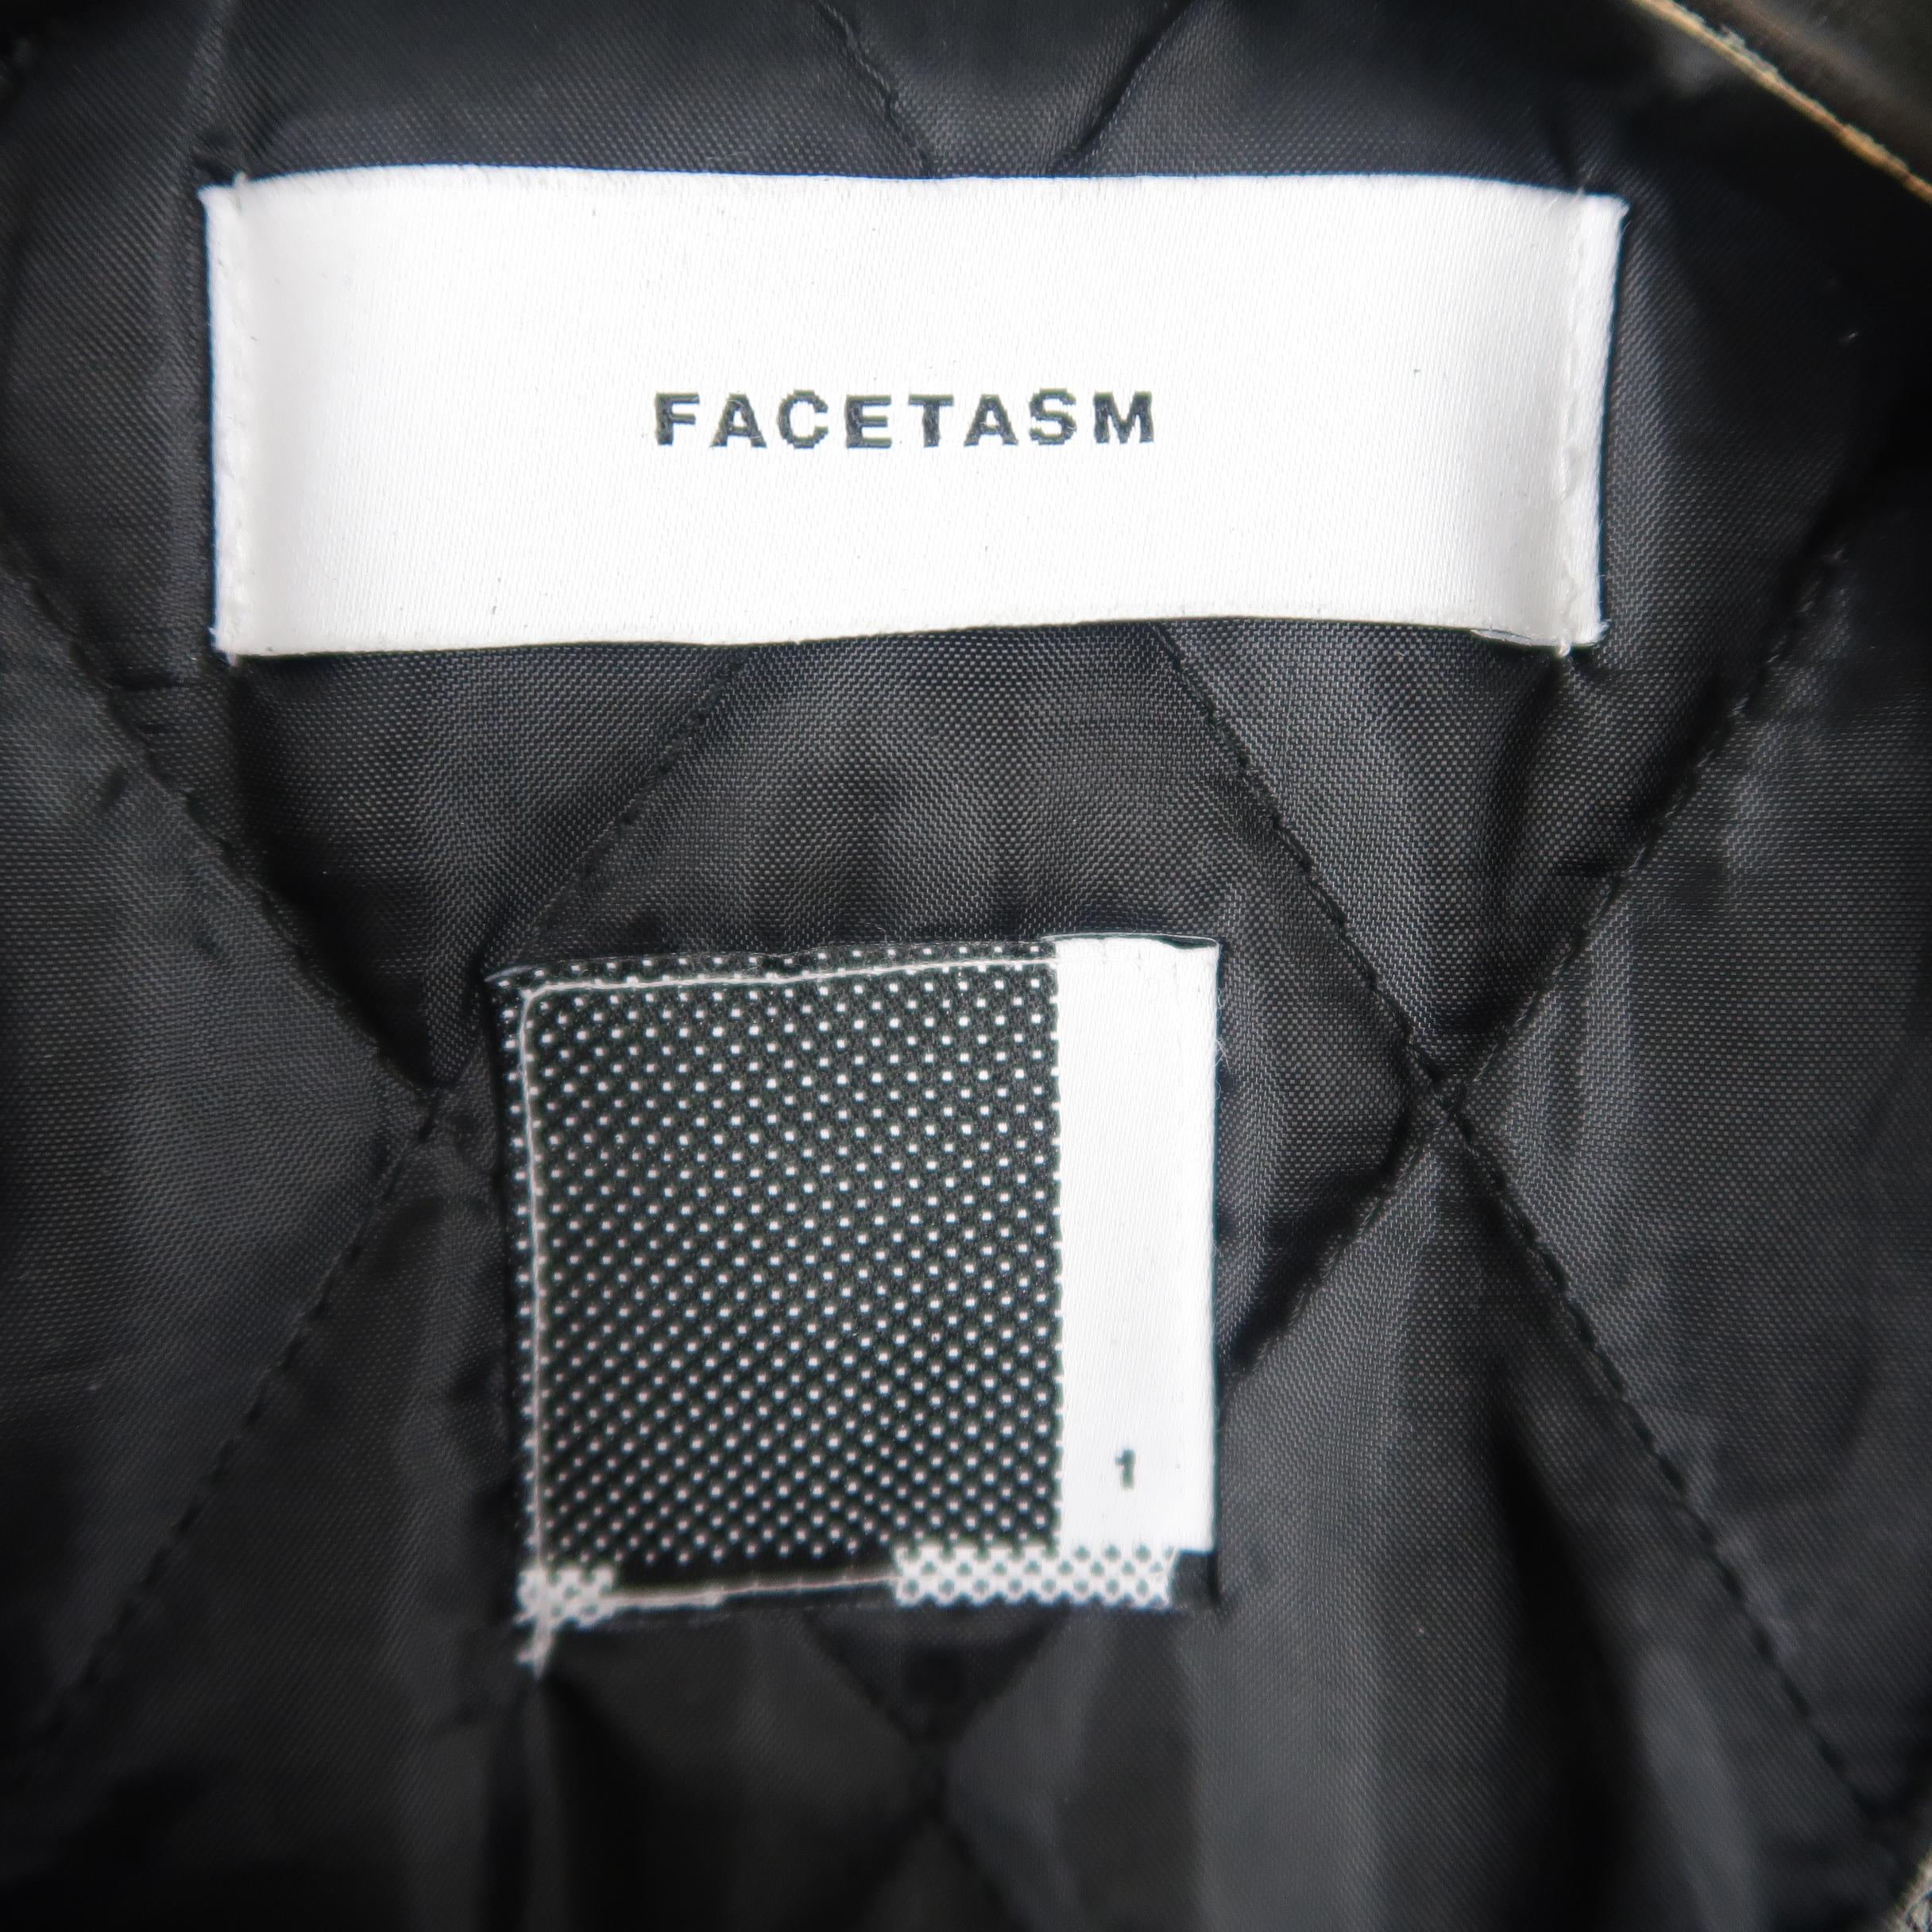 Facetasm Beige Distressed Leather Knit Panel Biker Motorcycle Jacket / Coat 3